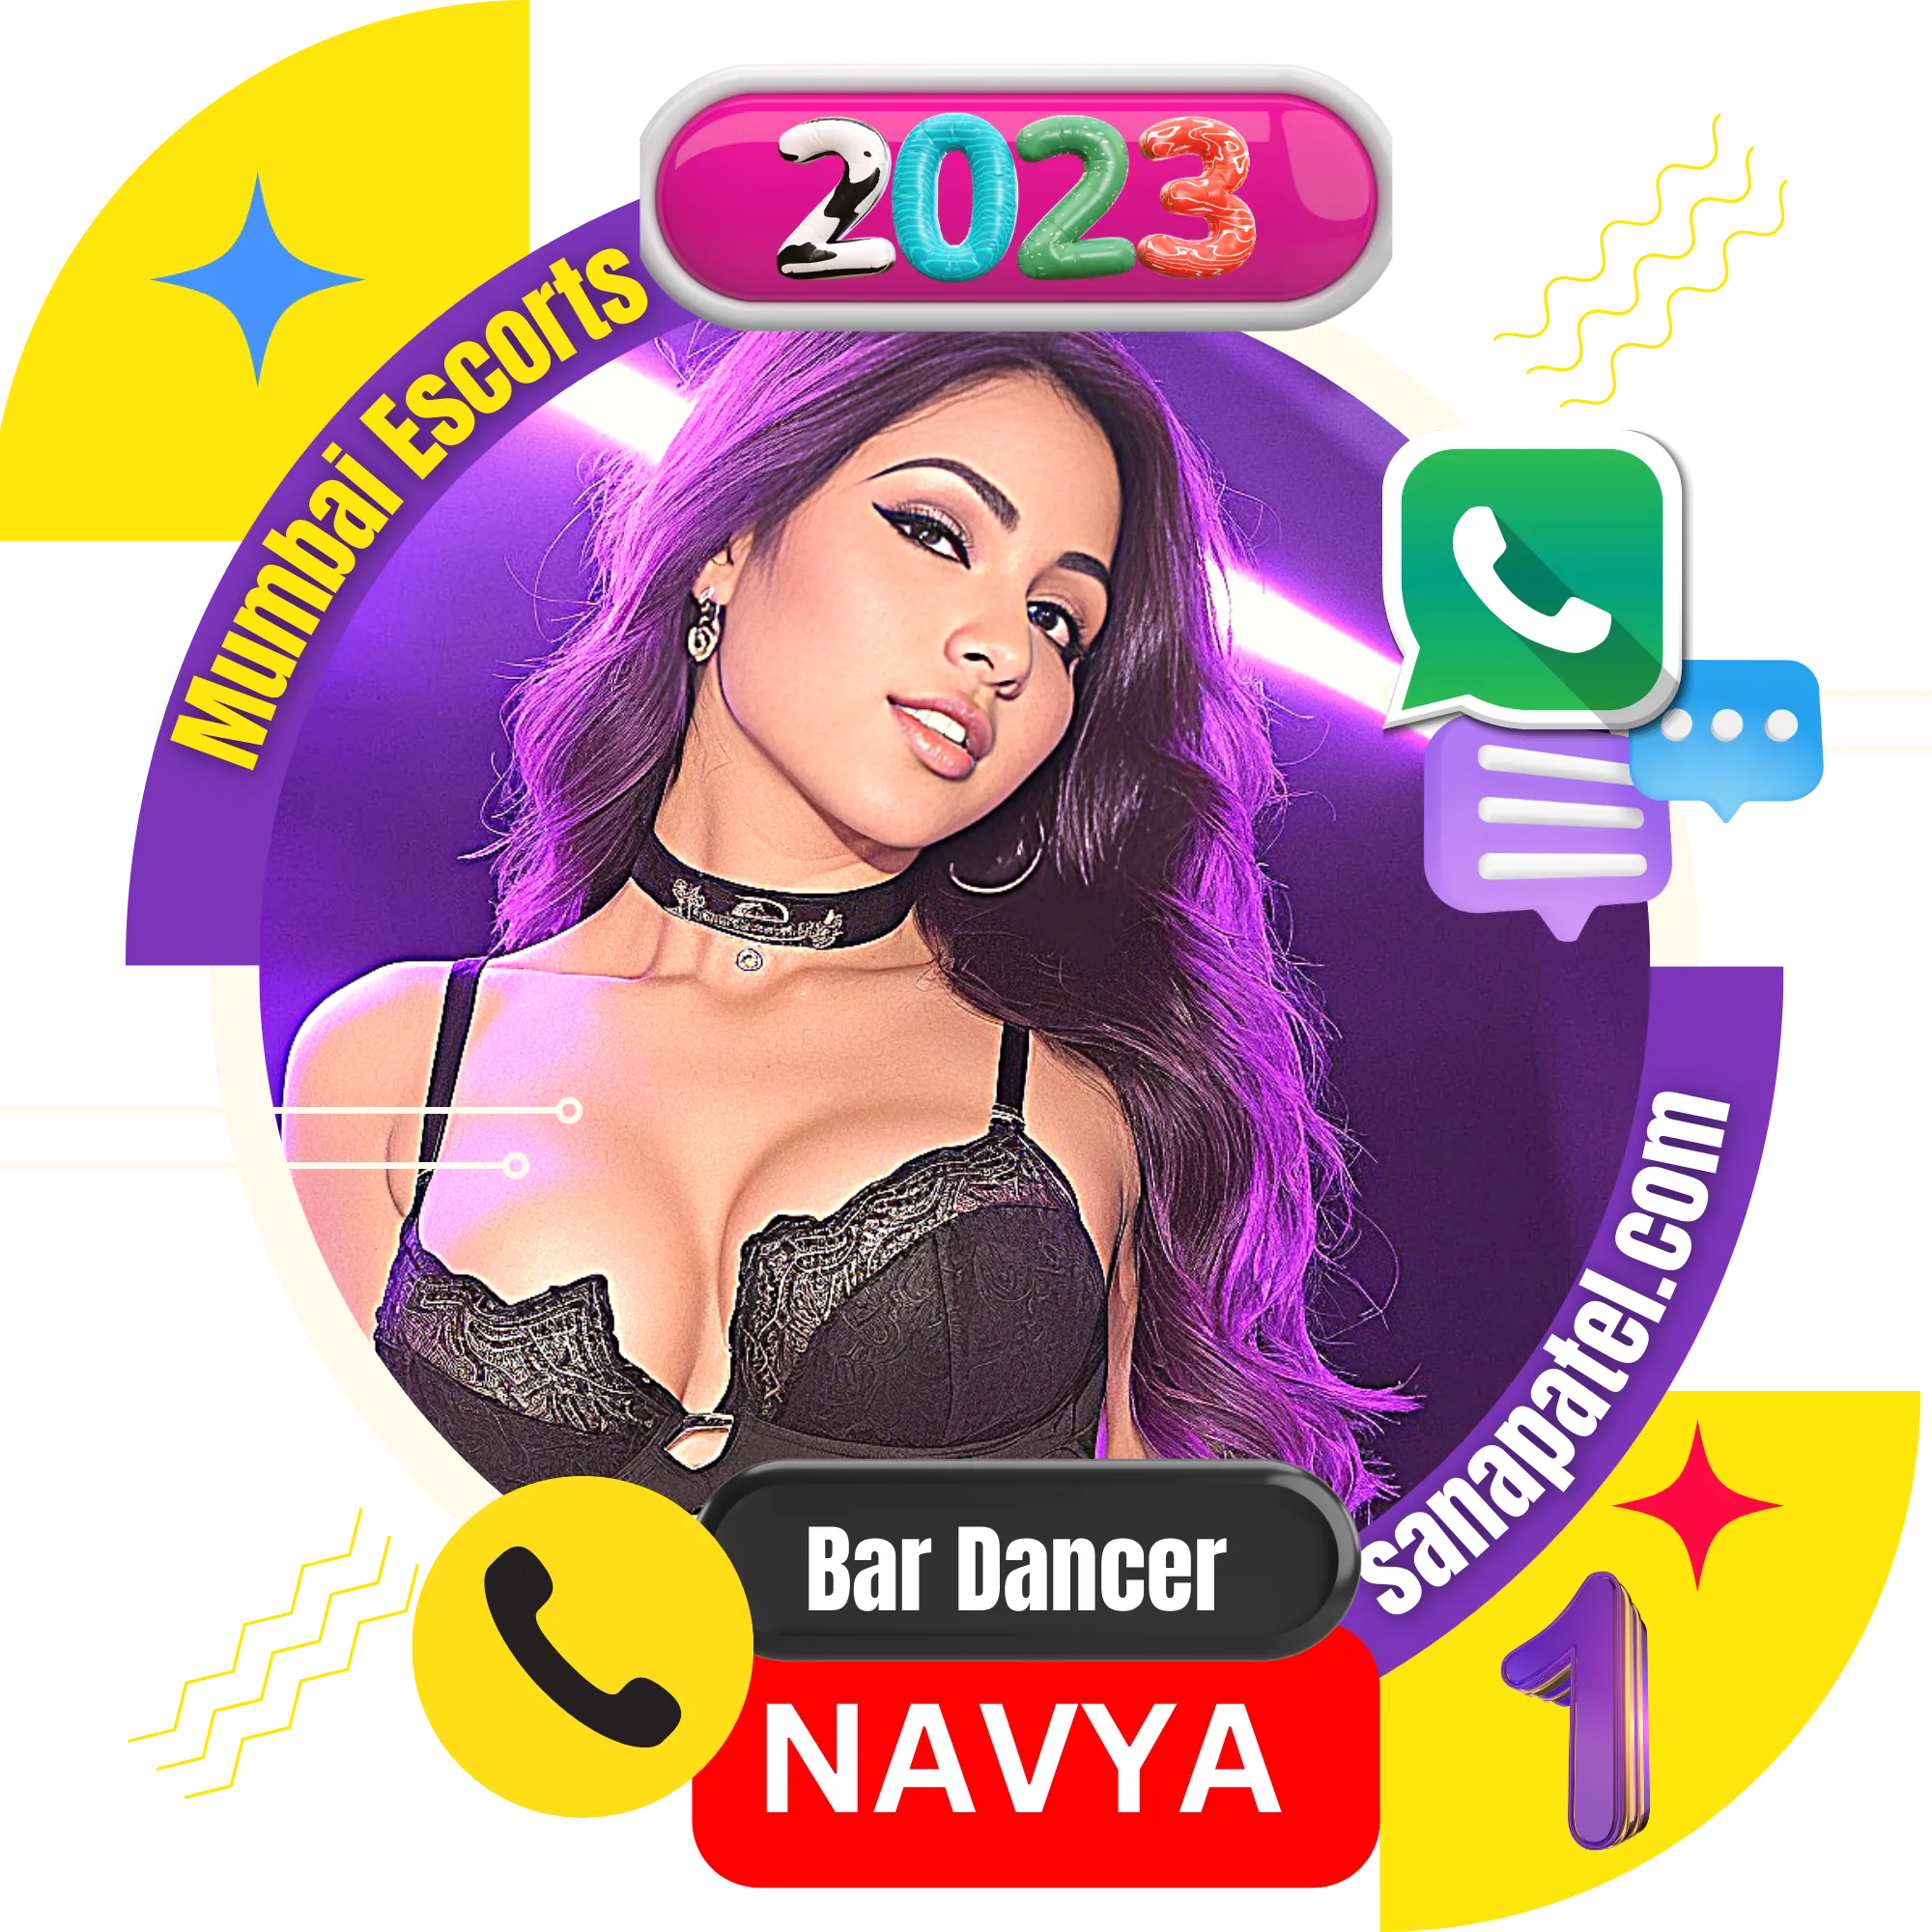 Sana Patel Mumbai Escorts Agency 1st top rated escorts in 2023 - Navya, Bar Dancer girl